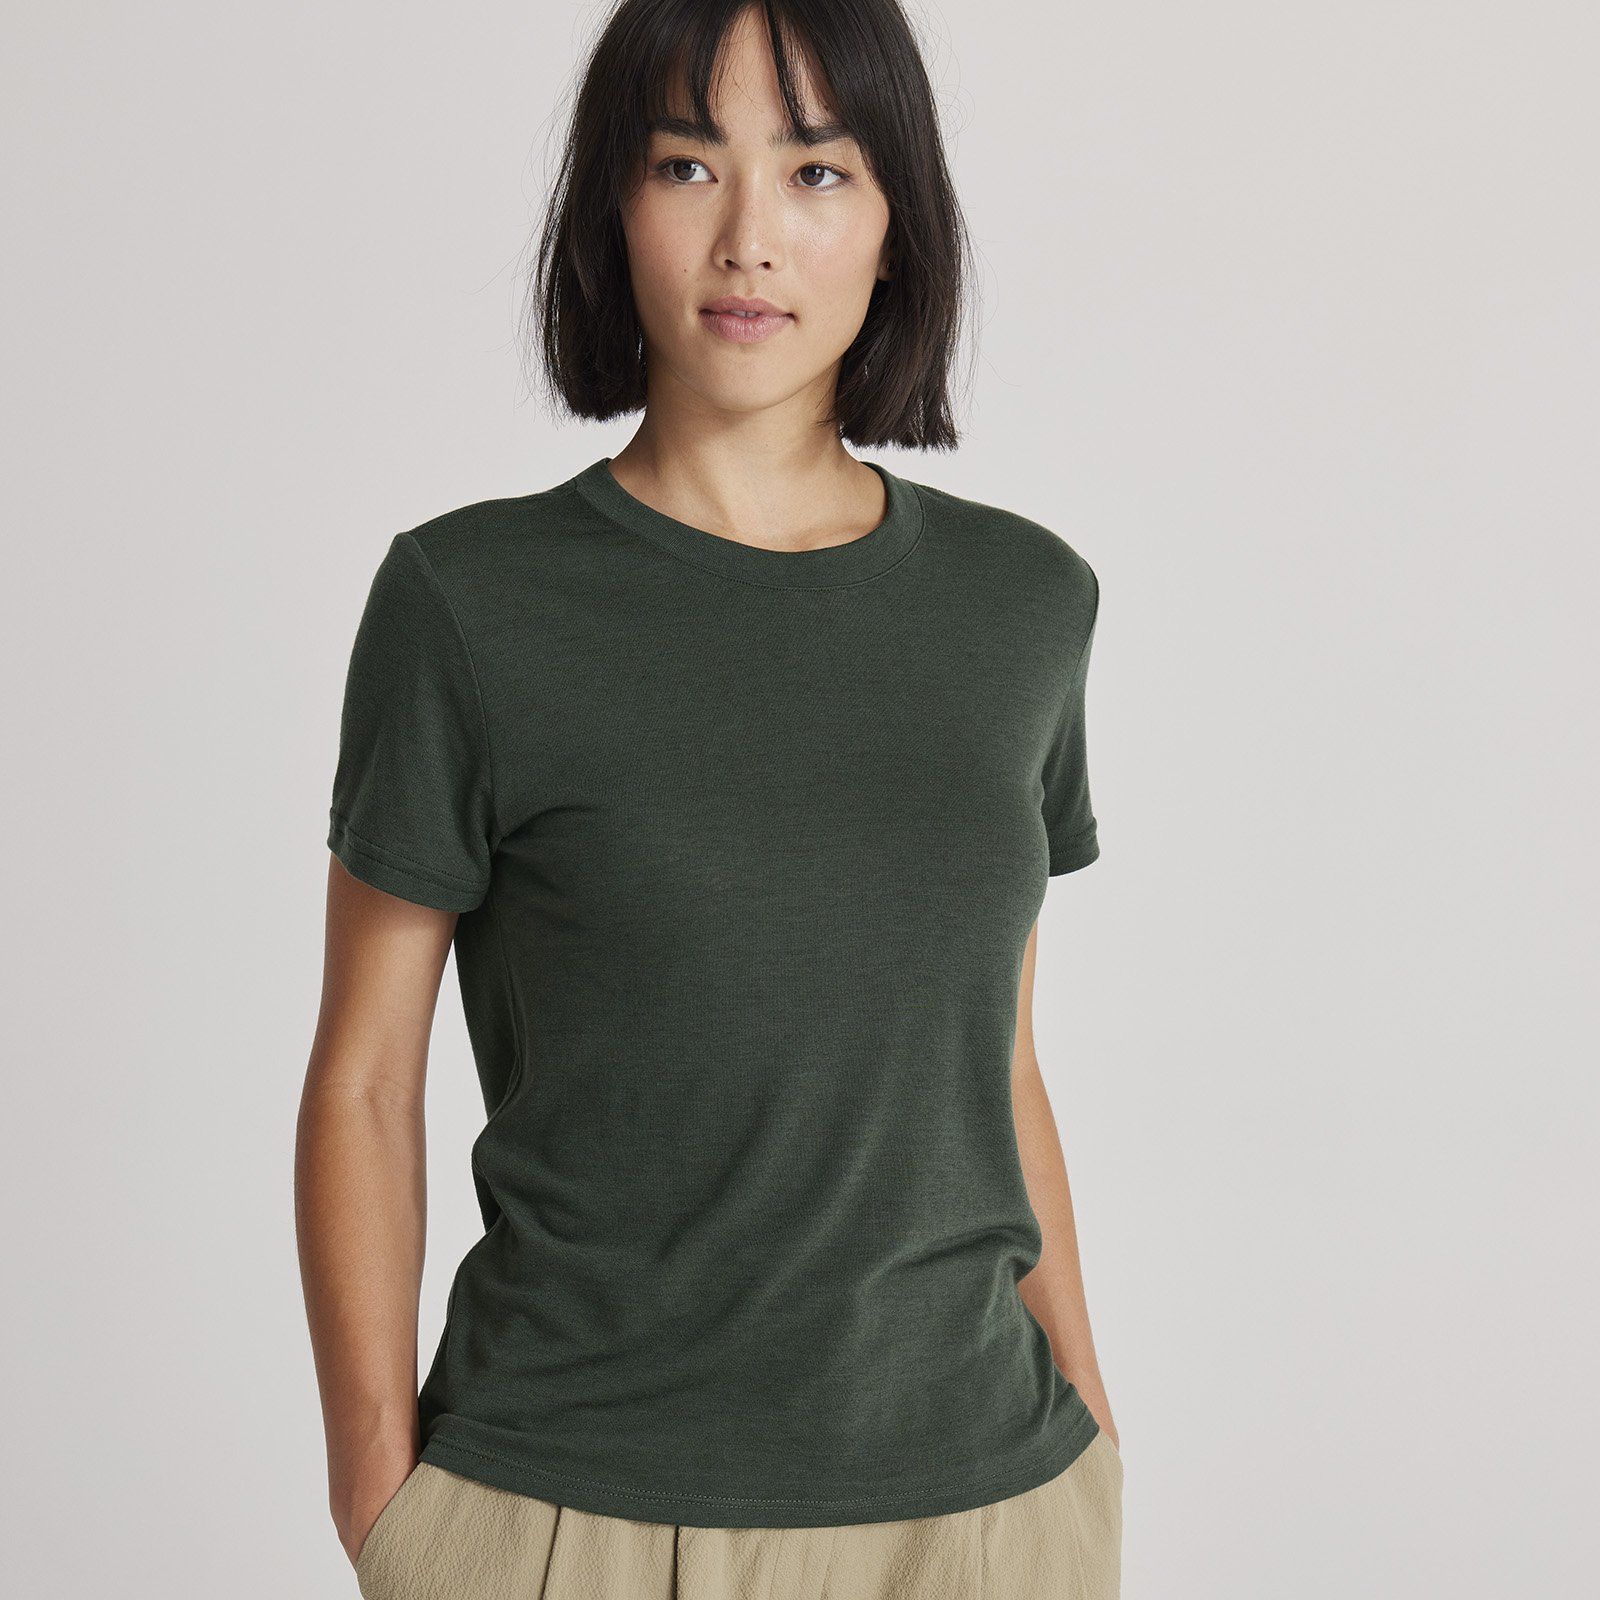 skranke sammentrækning Sprede 24 Best T-Shirts for Women - Which T-Shirt Brand Is the Best?